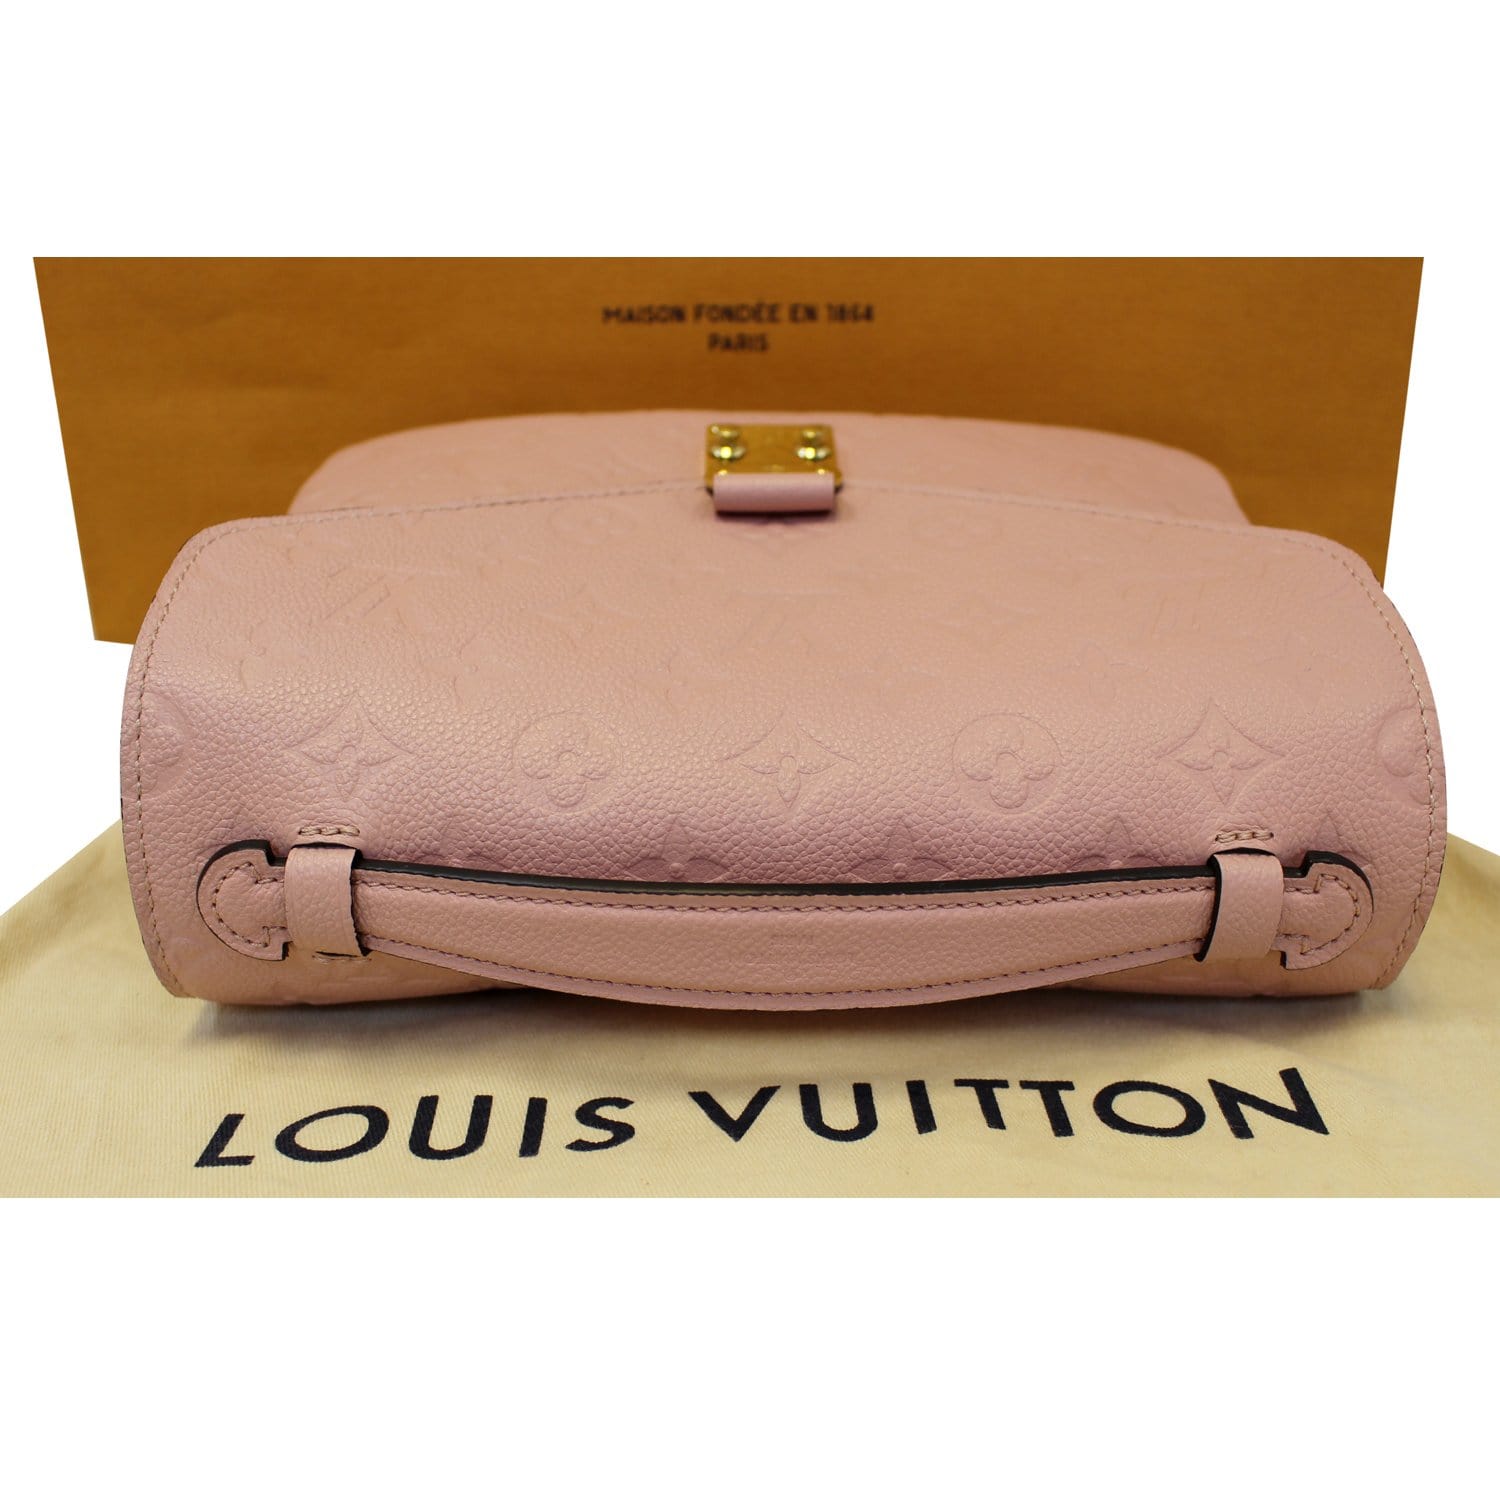 Louis Vuitton Empreinte Pochette Metis Rose Poudre 539072